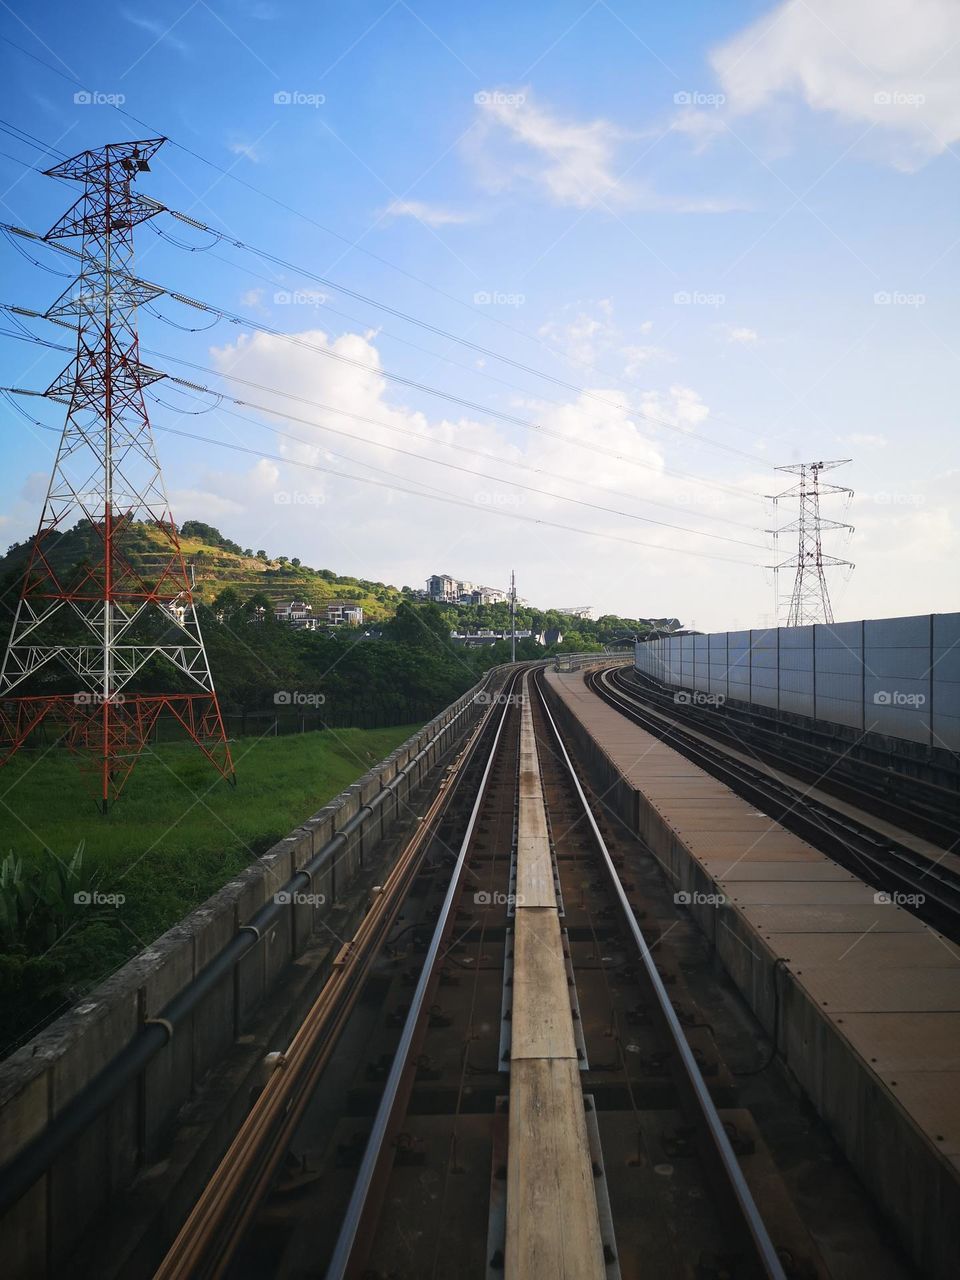 LRT Malaysia